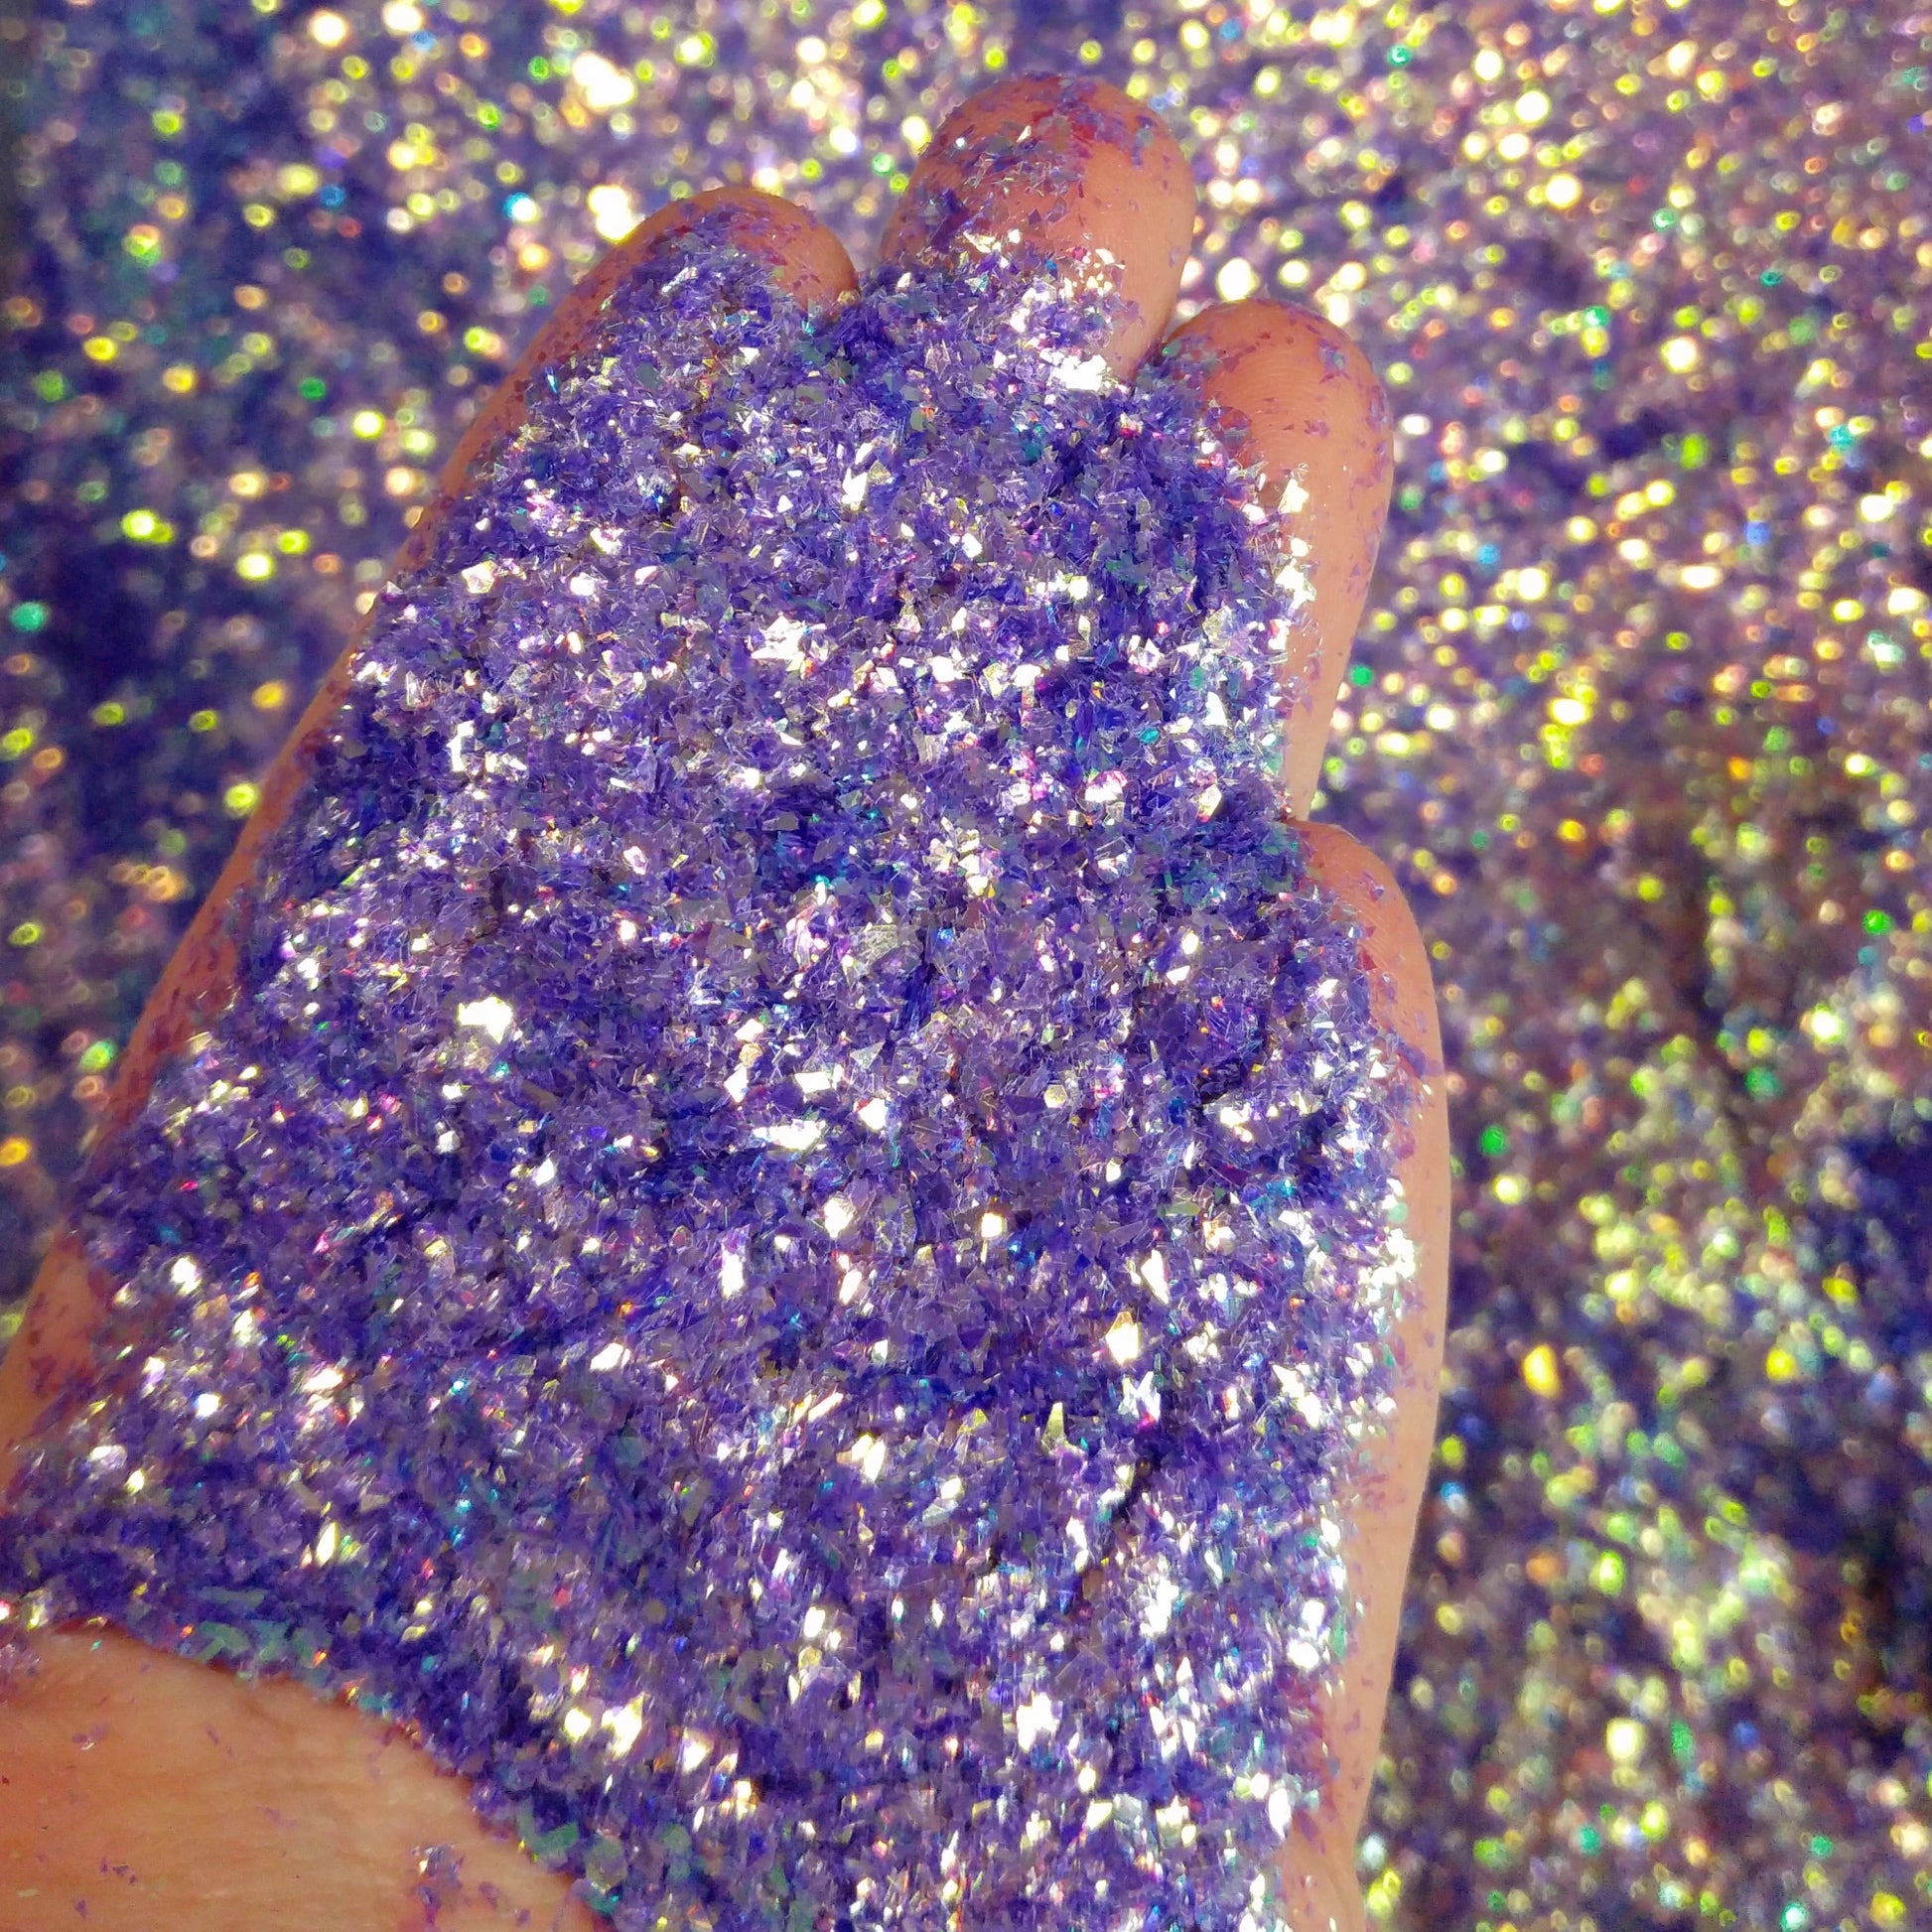 Purple Mylar Glitter Flakes - People Eater  By Crazoulis Gitter